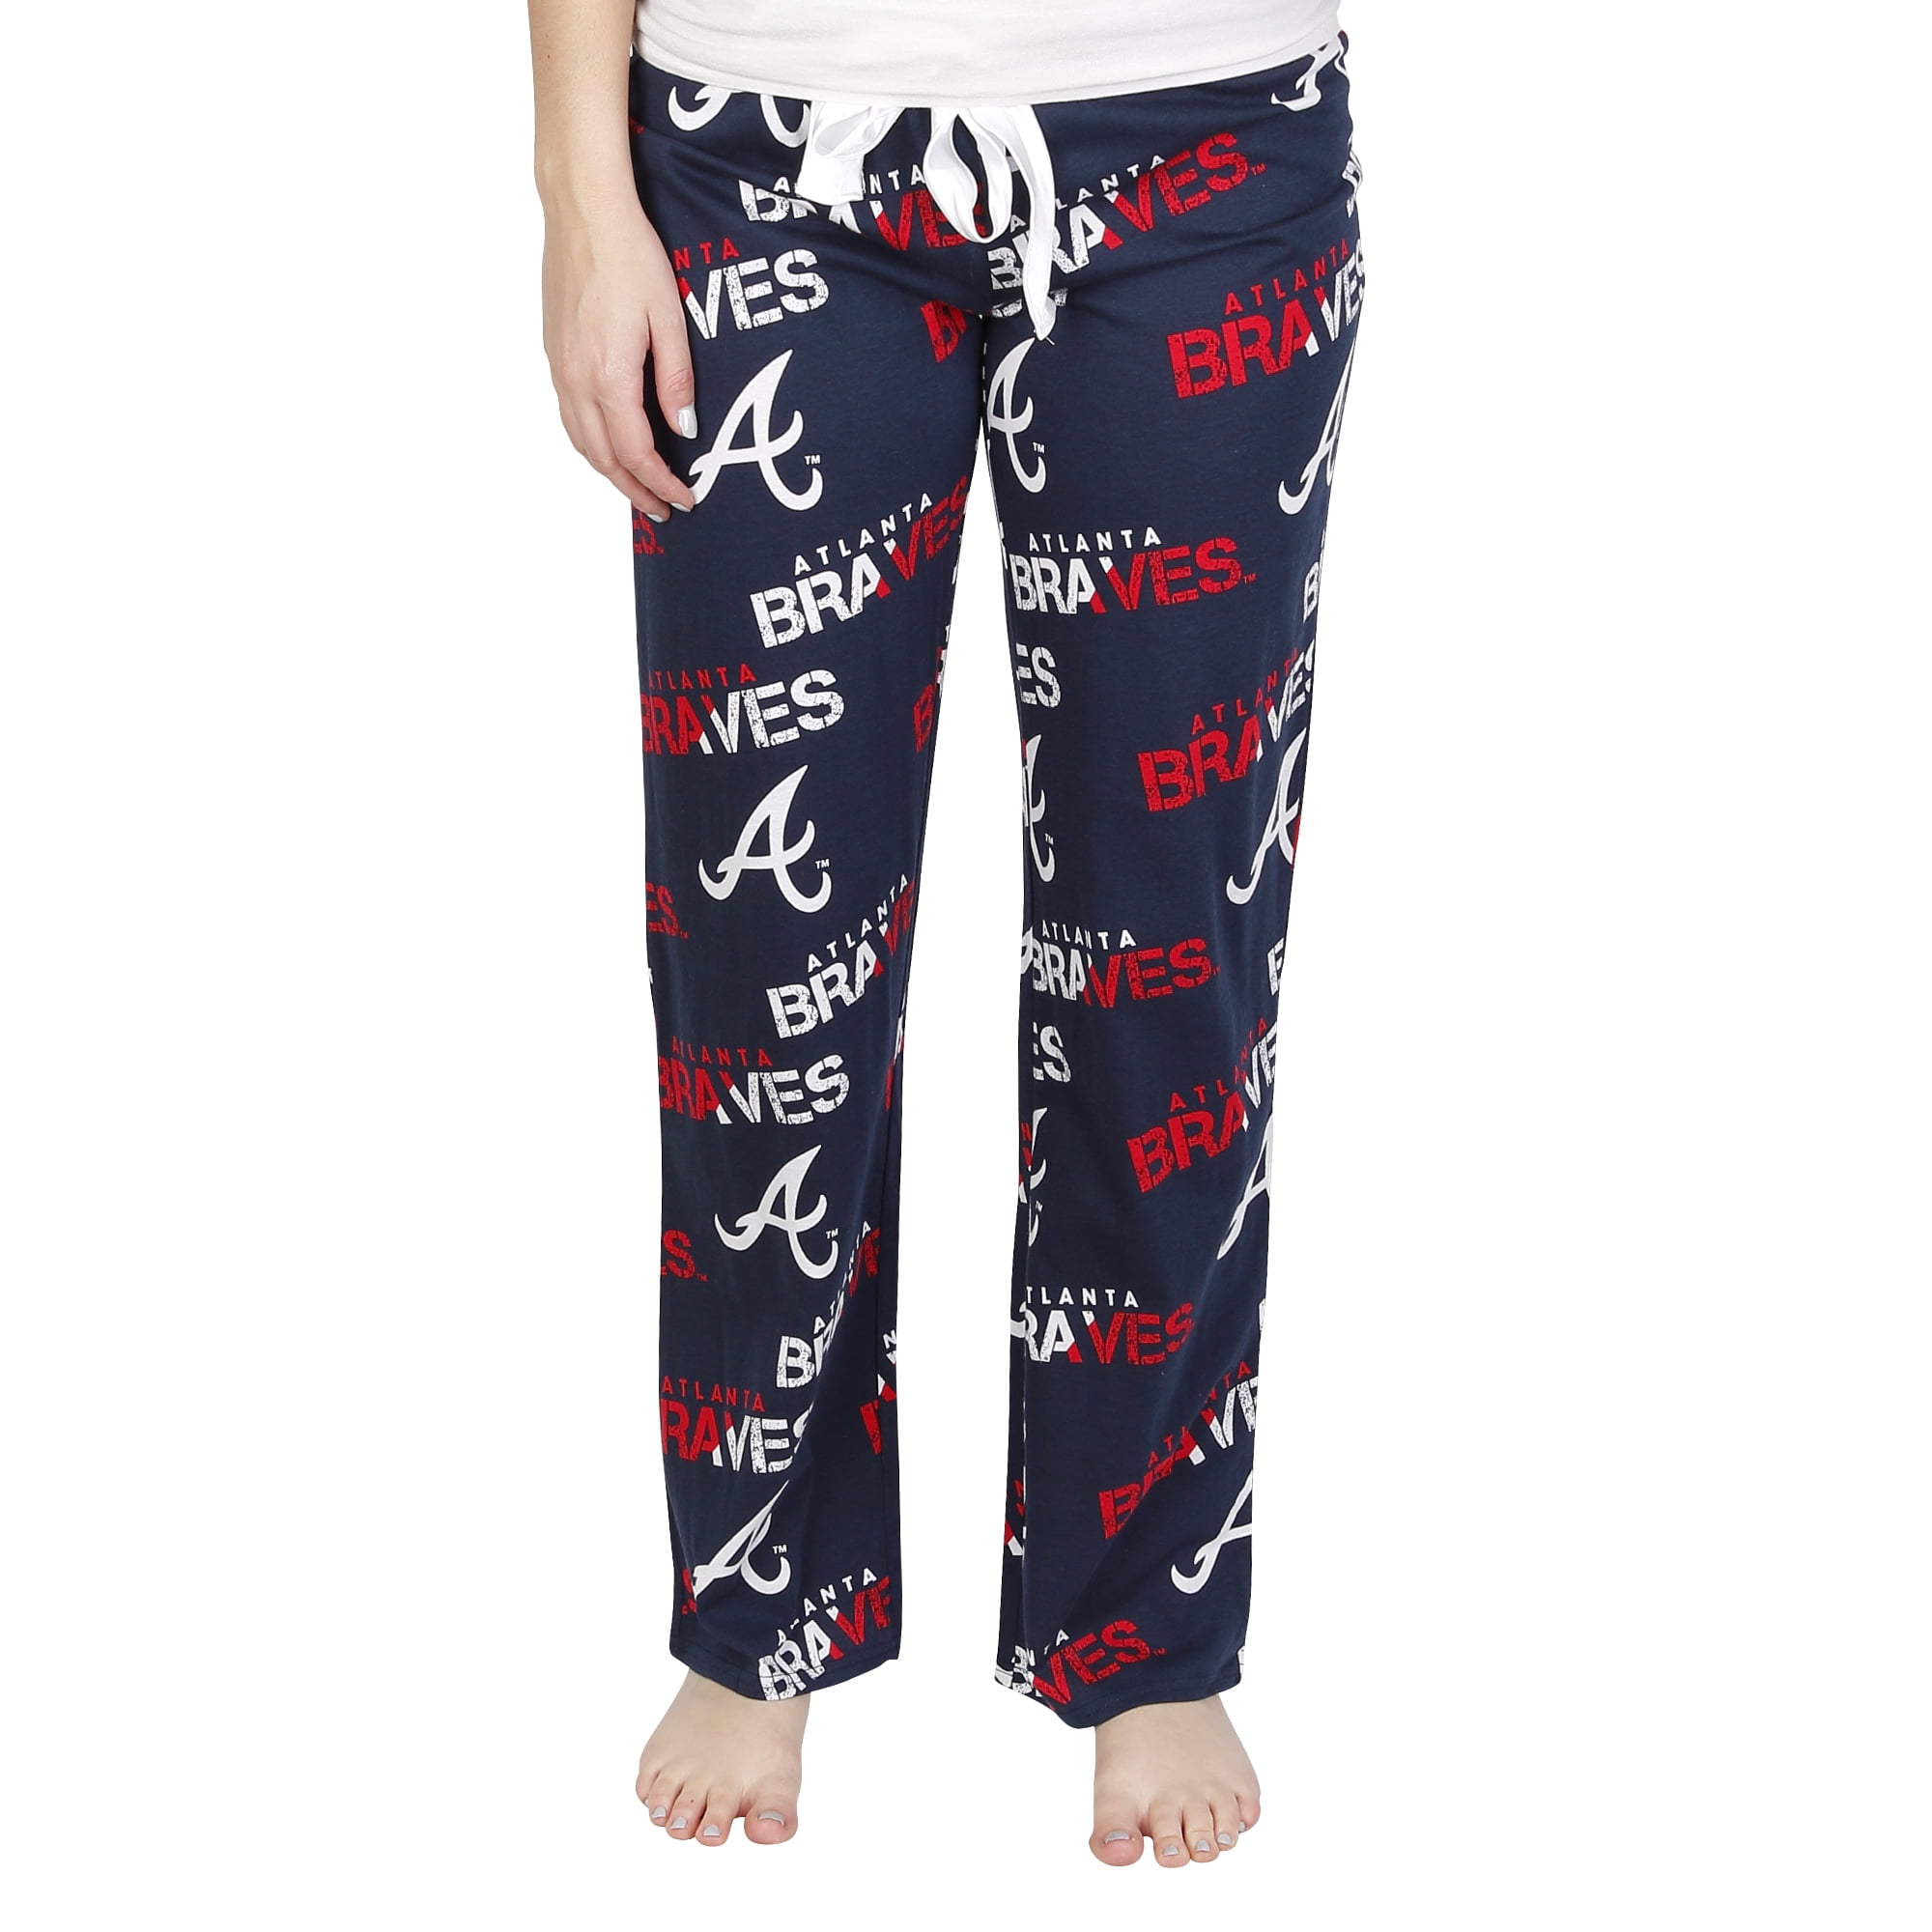 Sideline Apparel - Atlanta Braves Ladies Knit Pant - Walmart.com ...